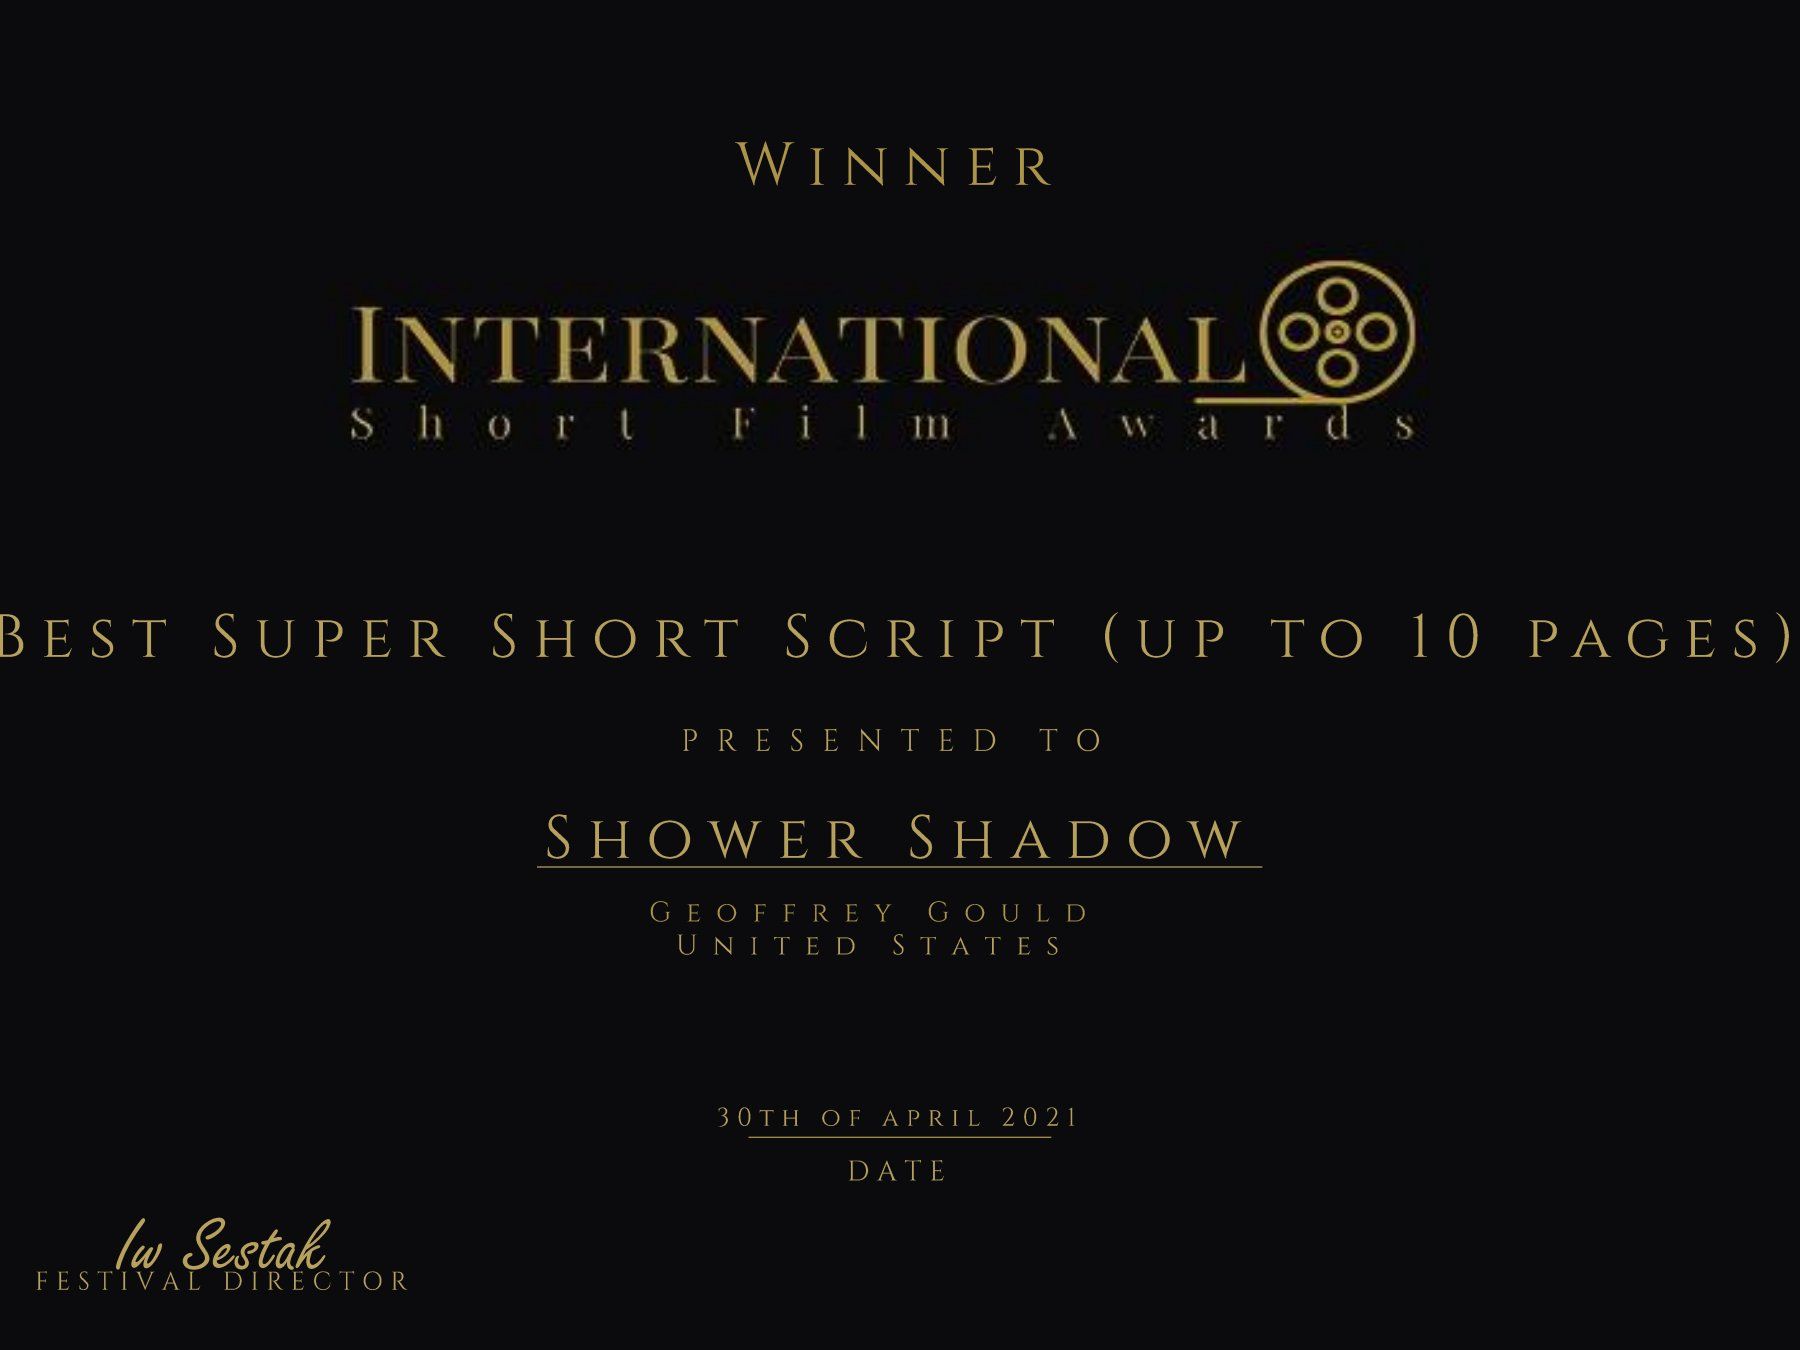 Shower Shadow Win